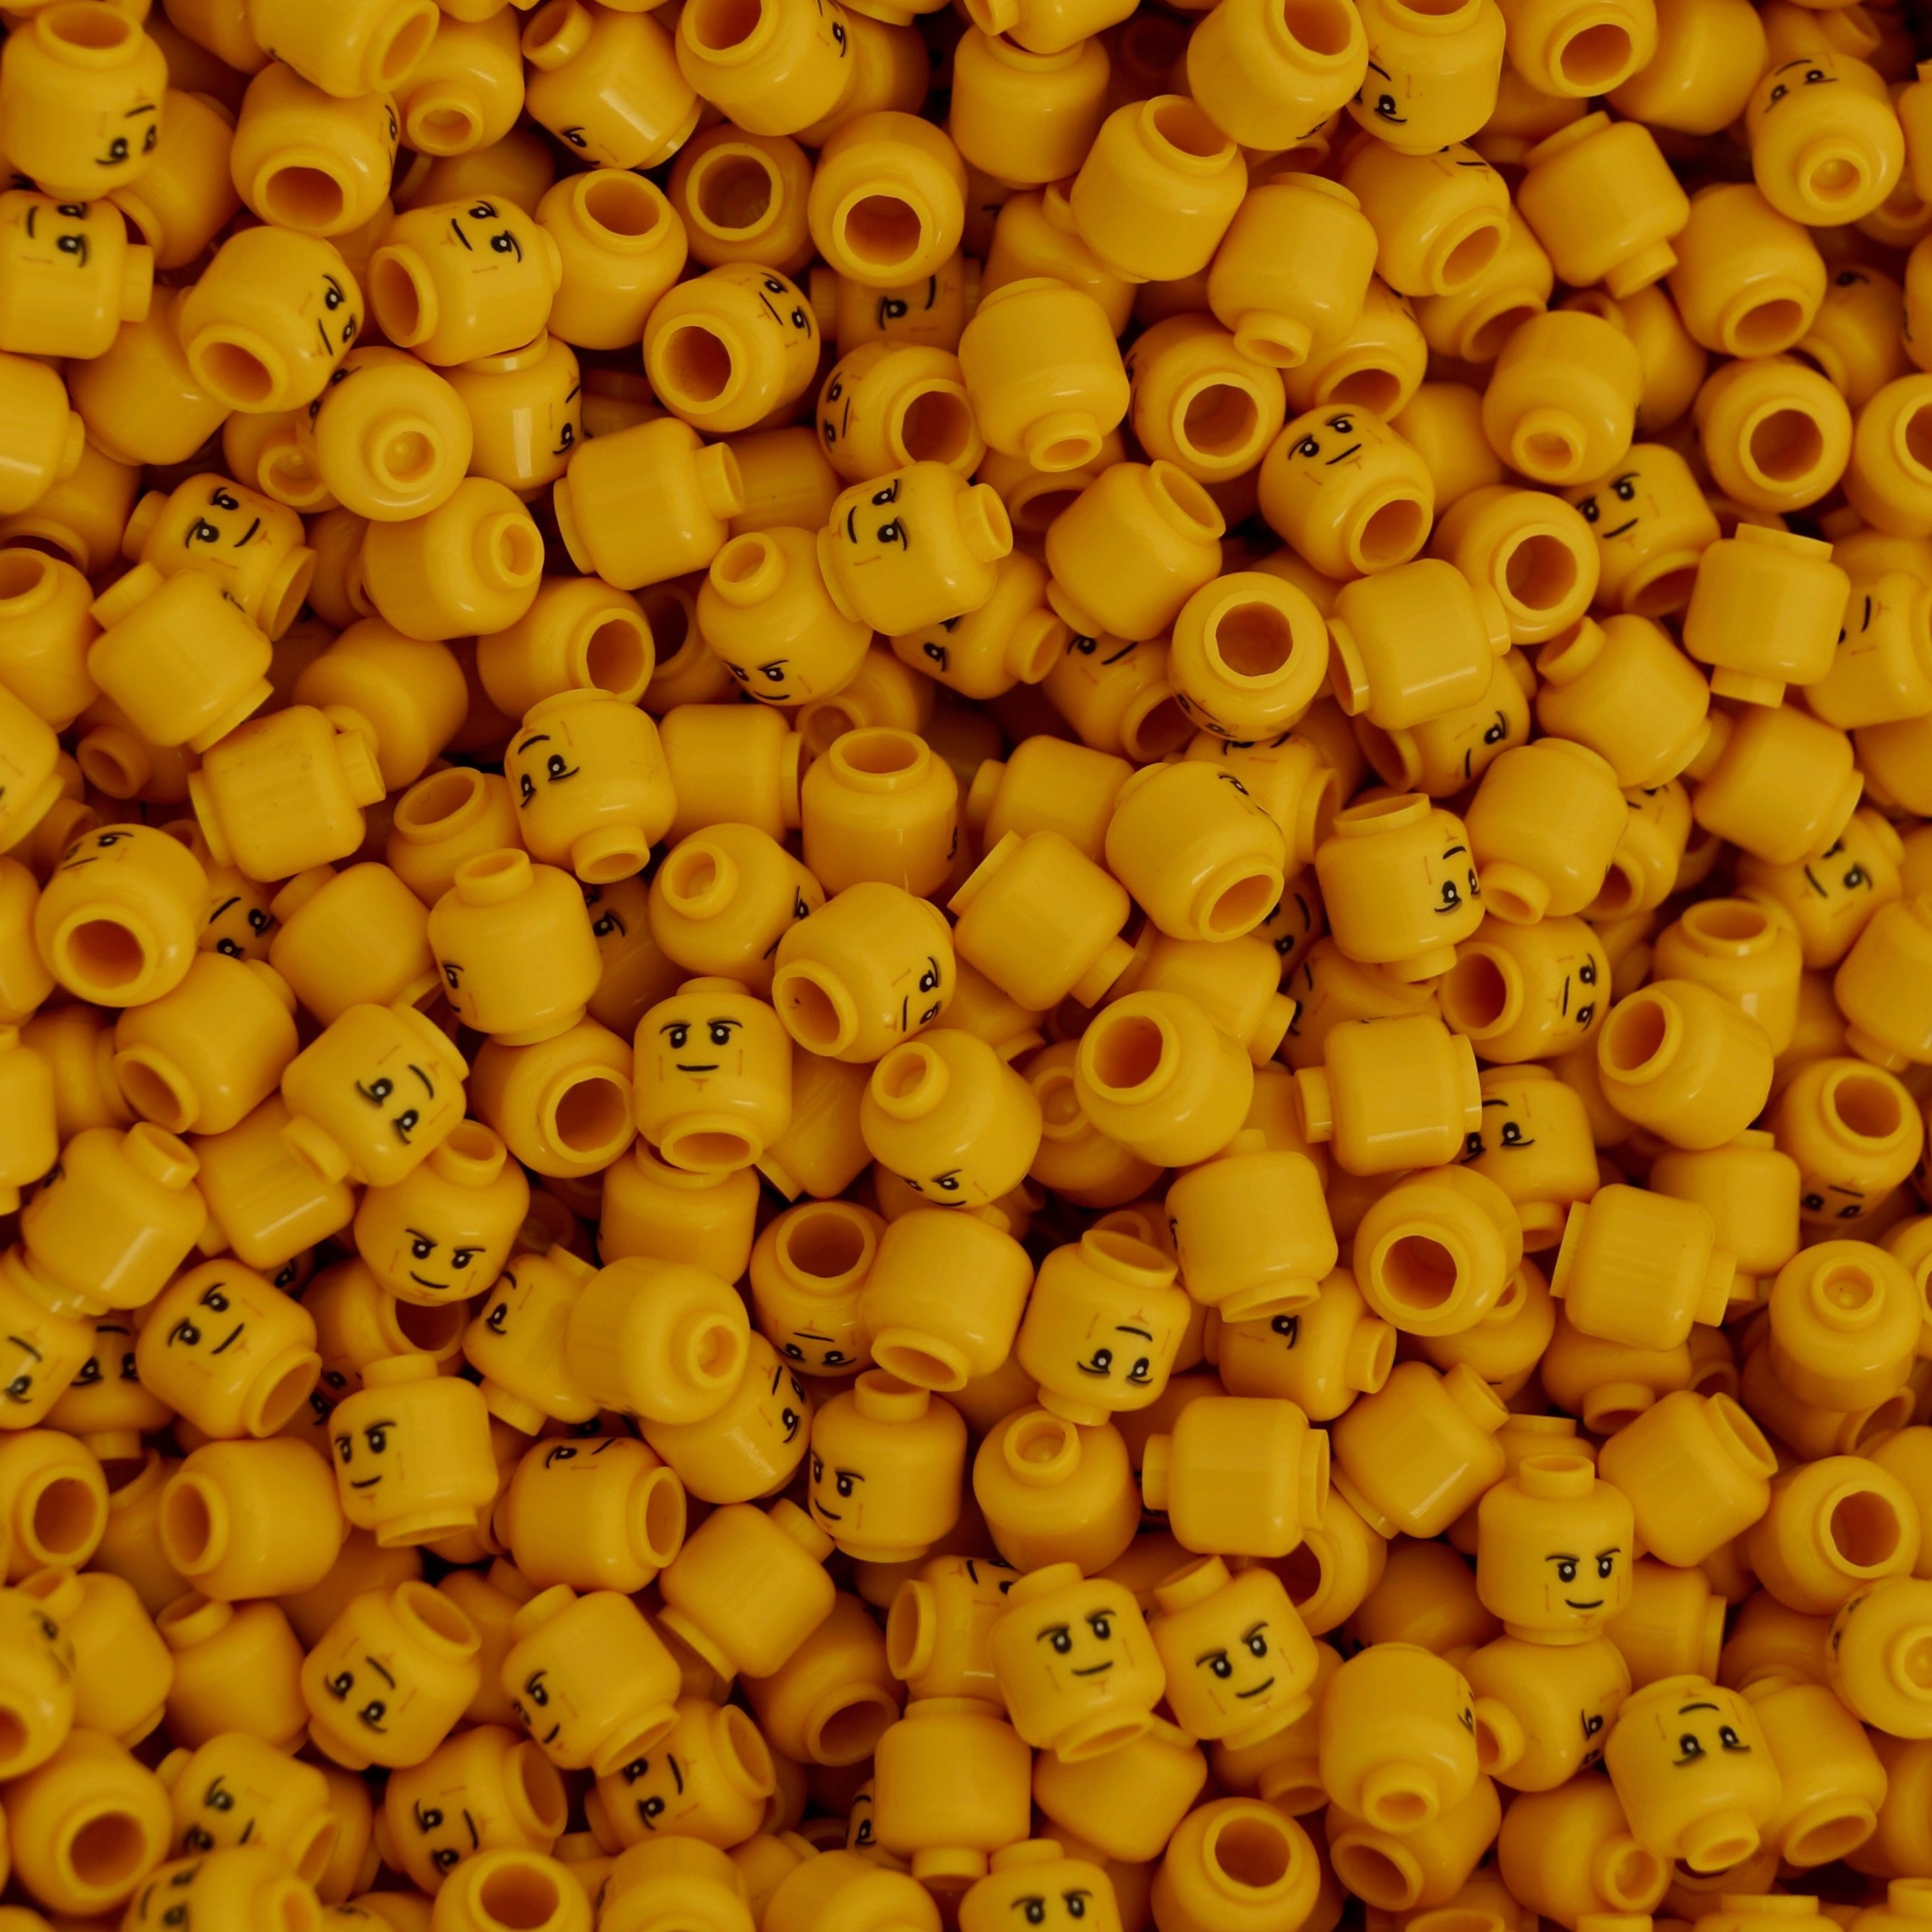 Yellow, Lego, toy, 2932x2932 wallpaper